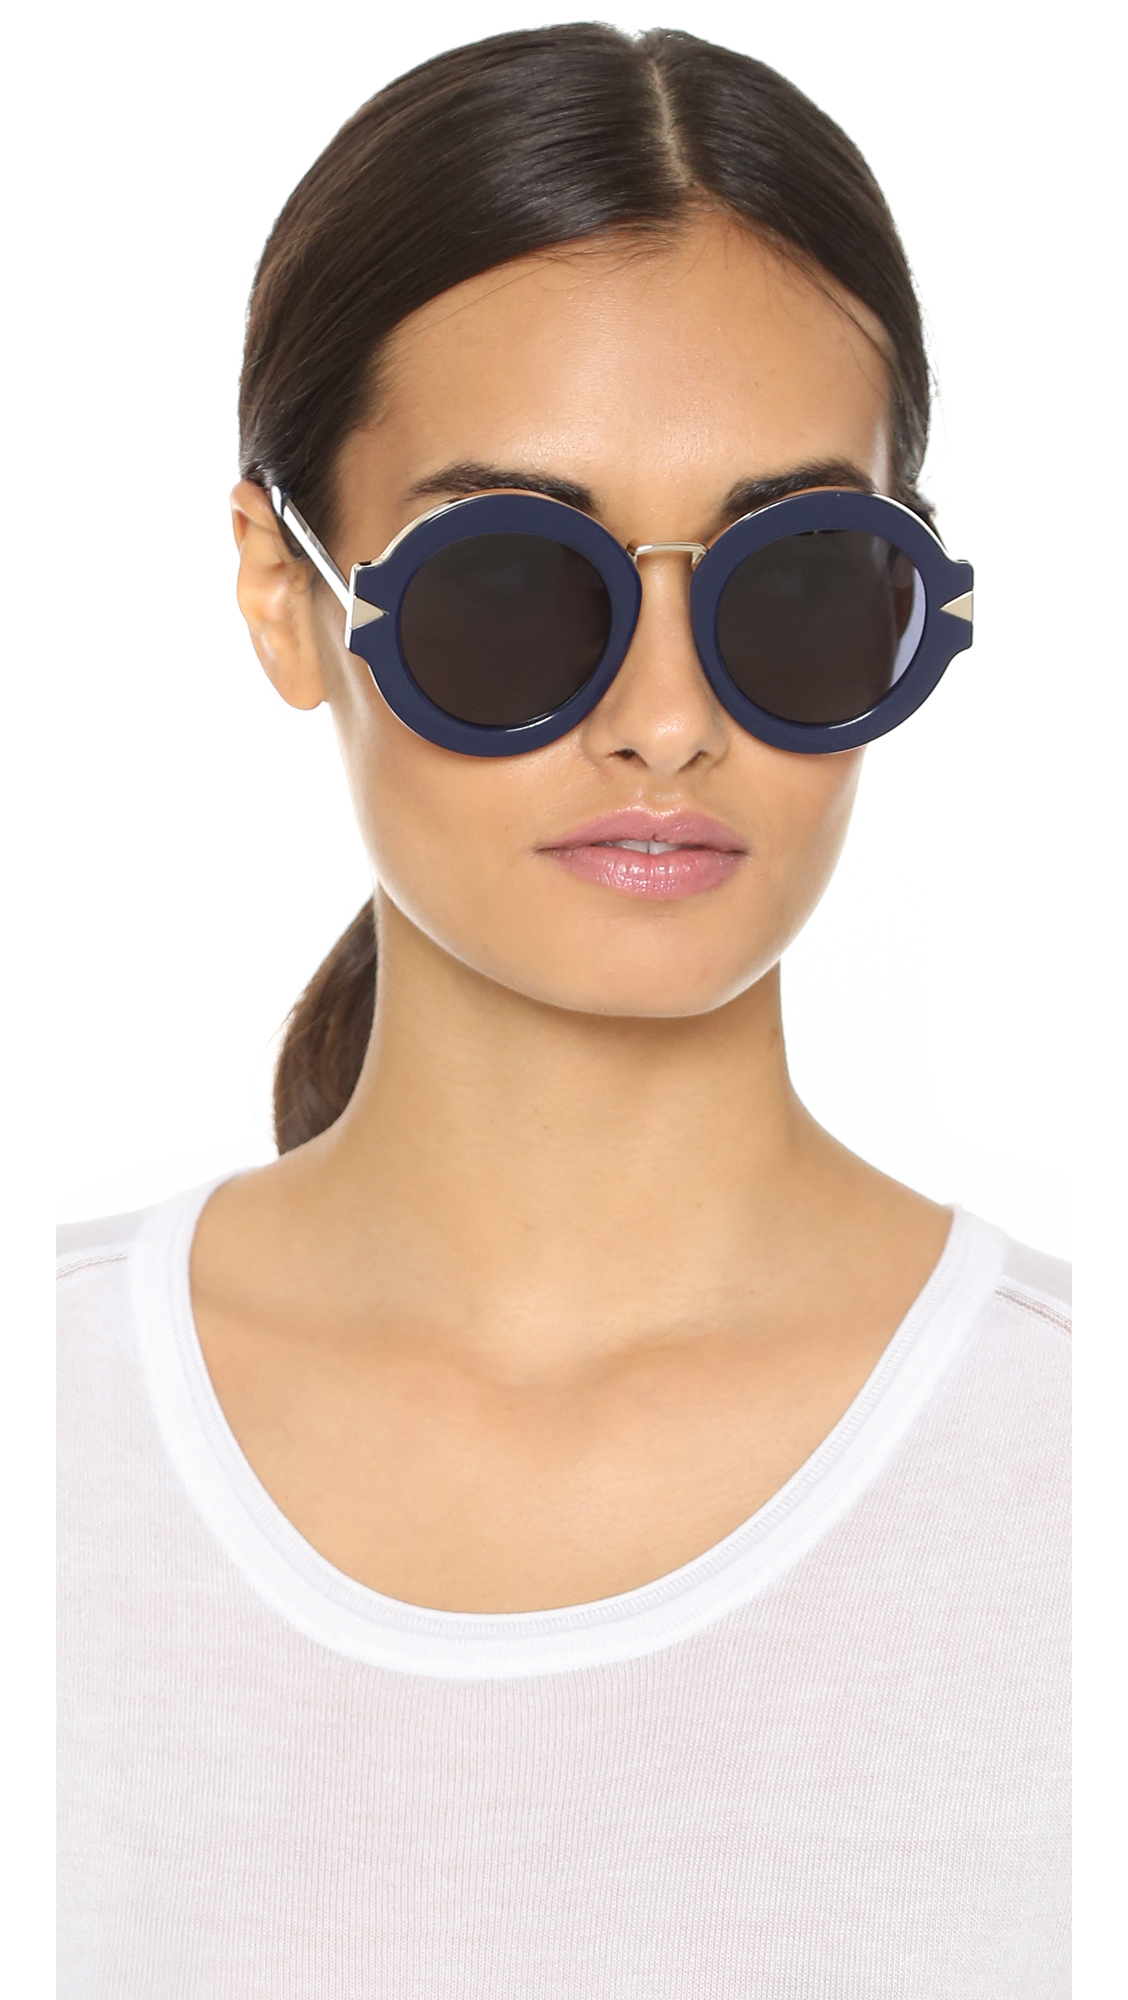 Karen Walker Special Fit Maze Sunglasses in Blue - Lyst